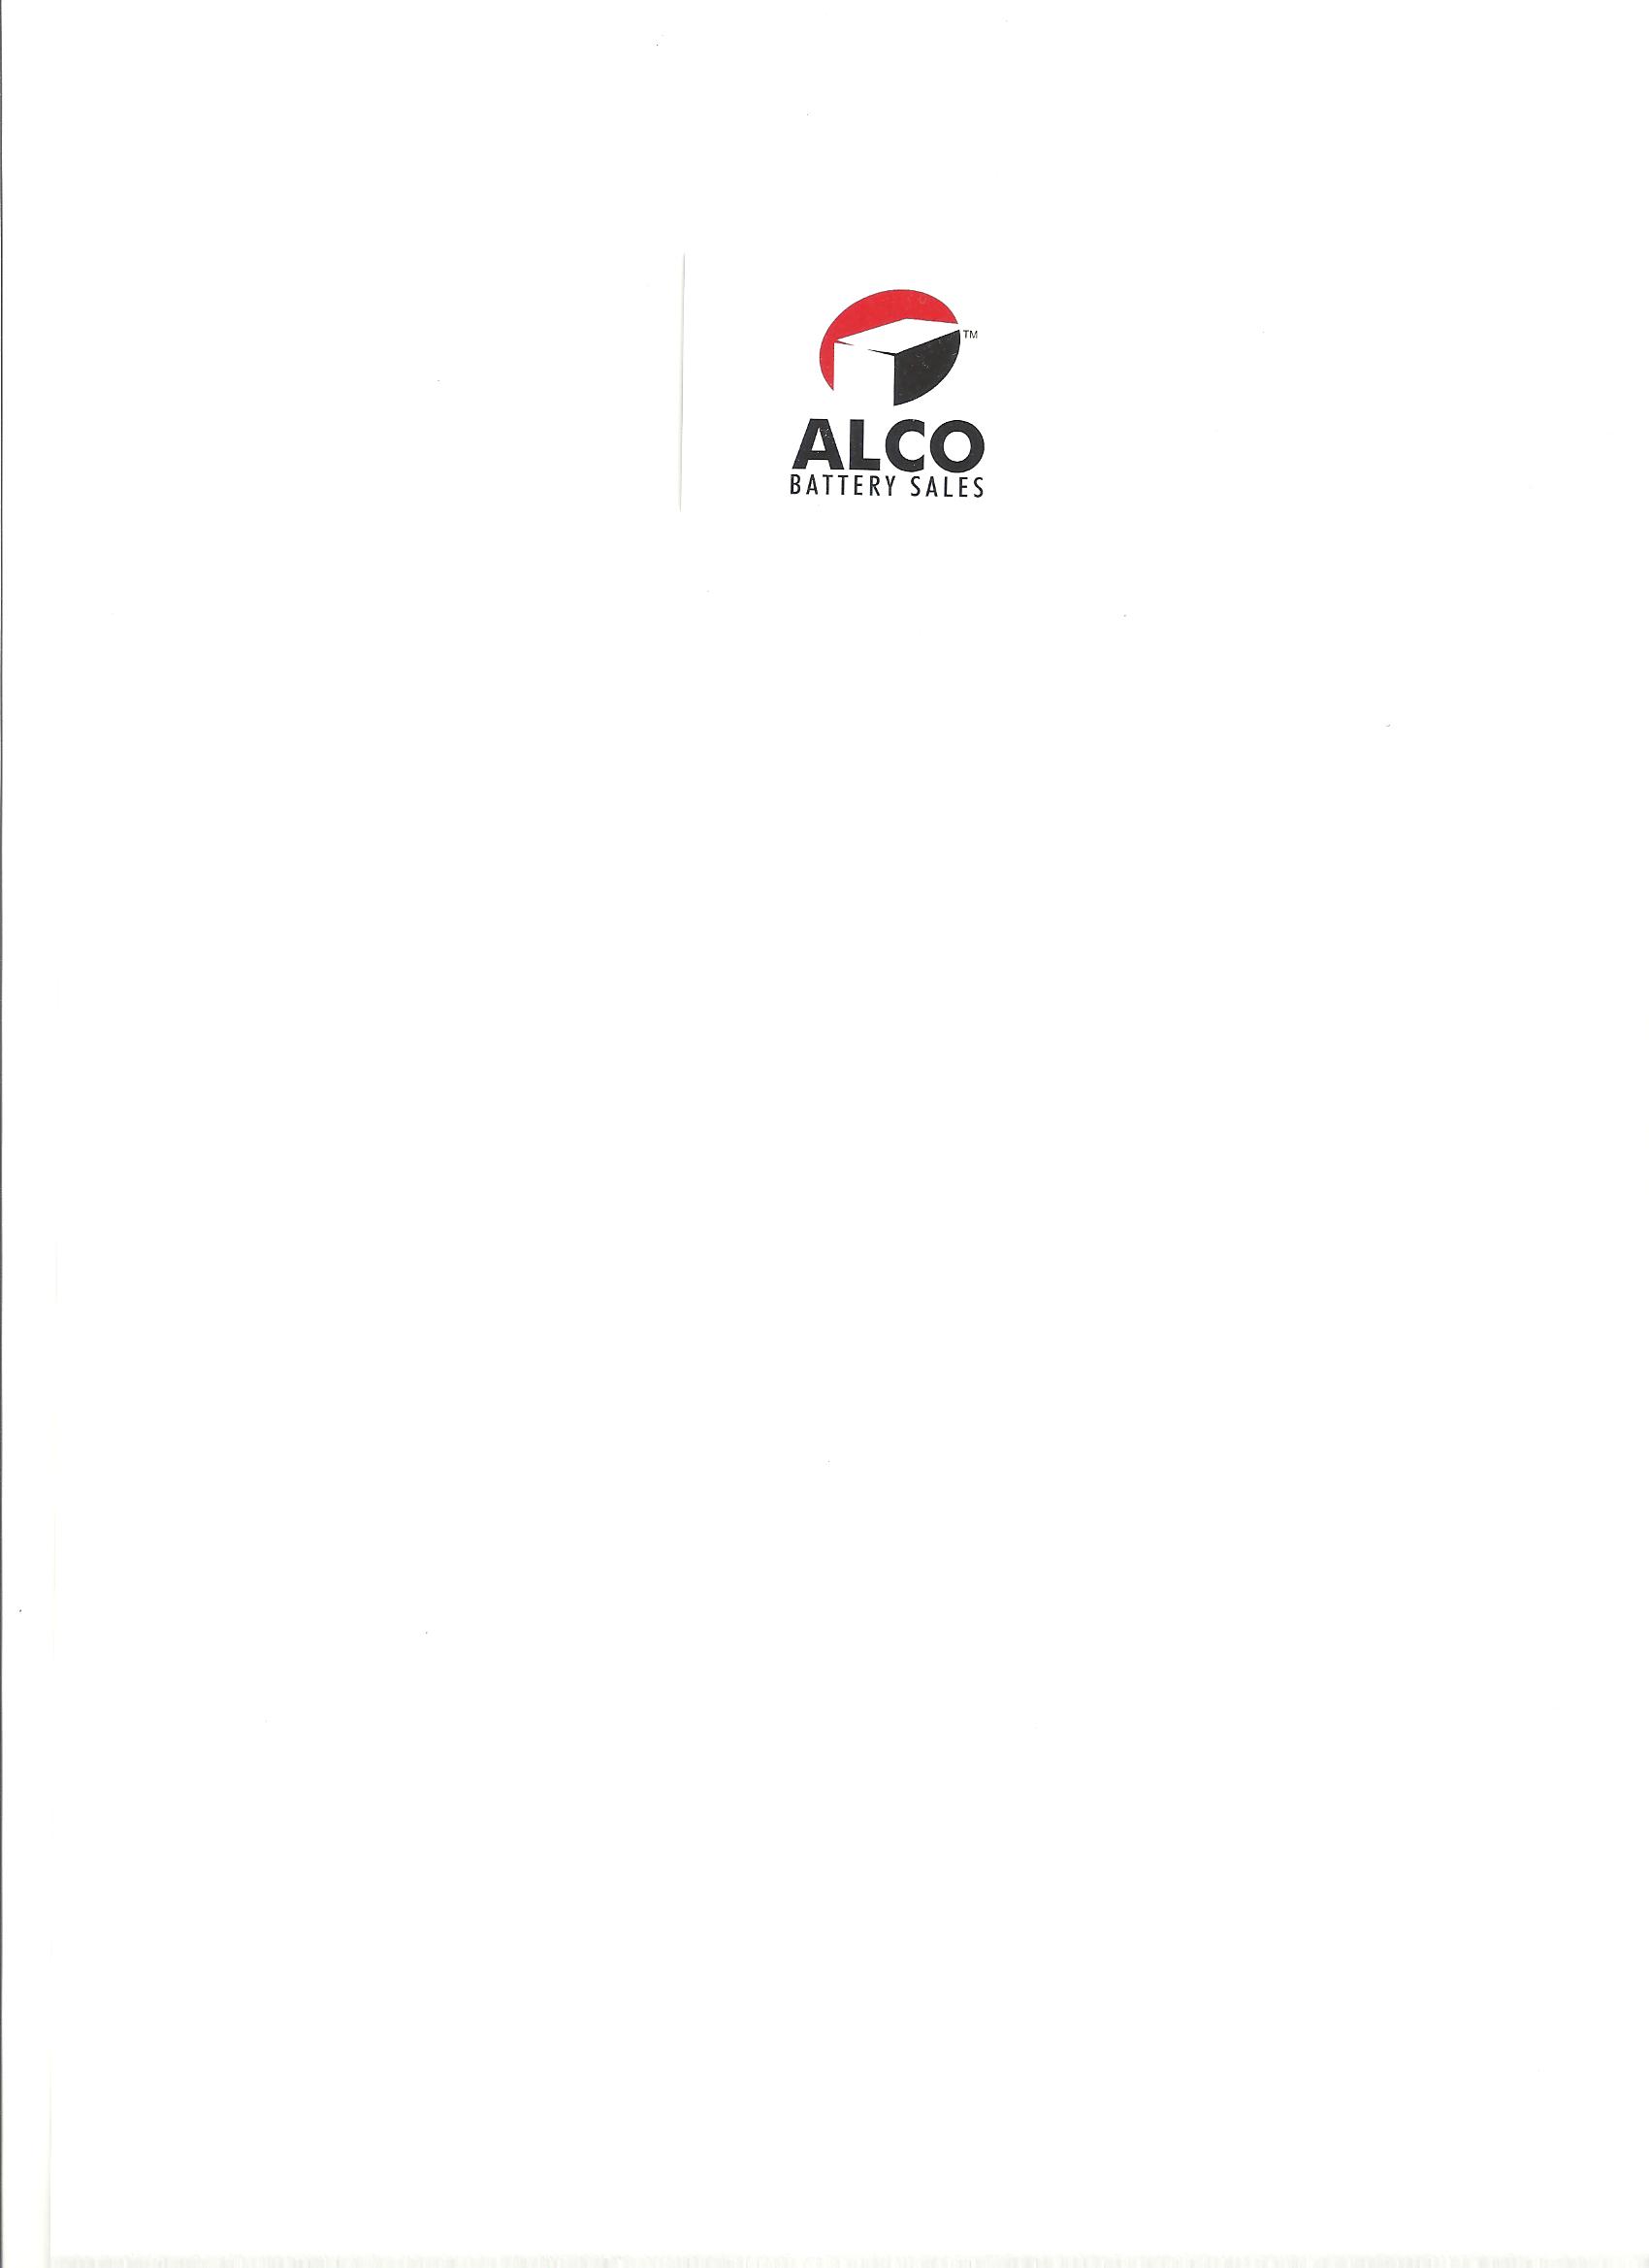 Alco Battery Sales (Aust) Pty. Ltd.